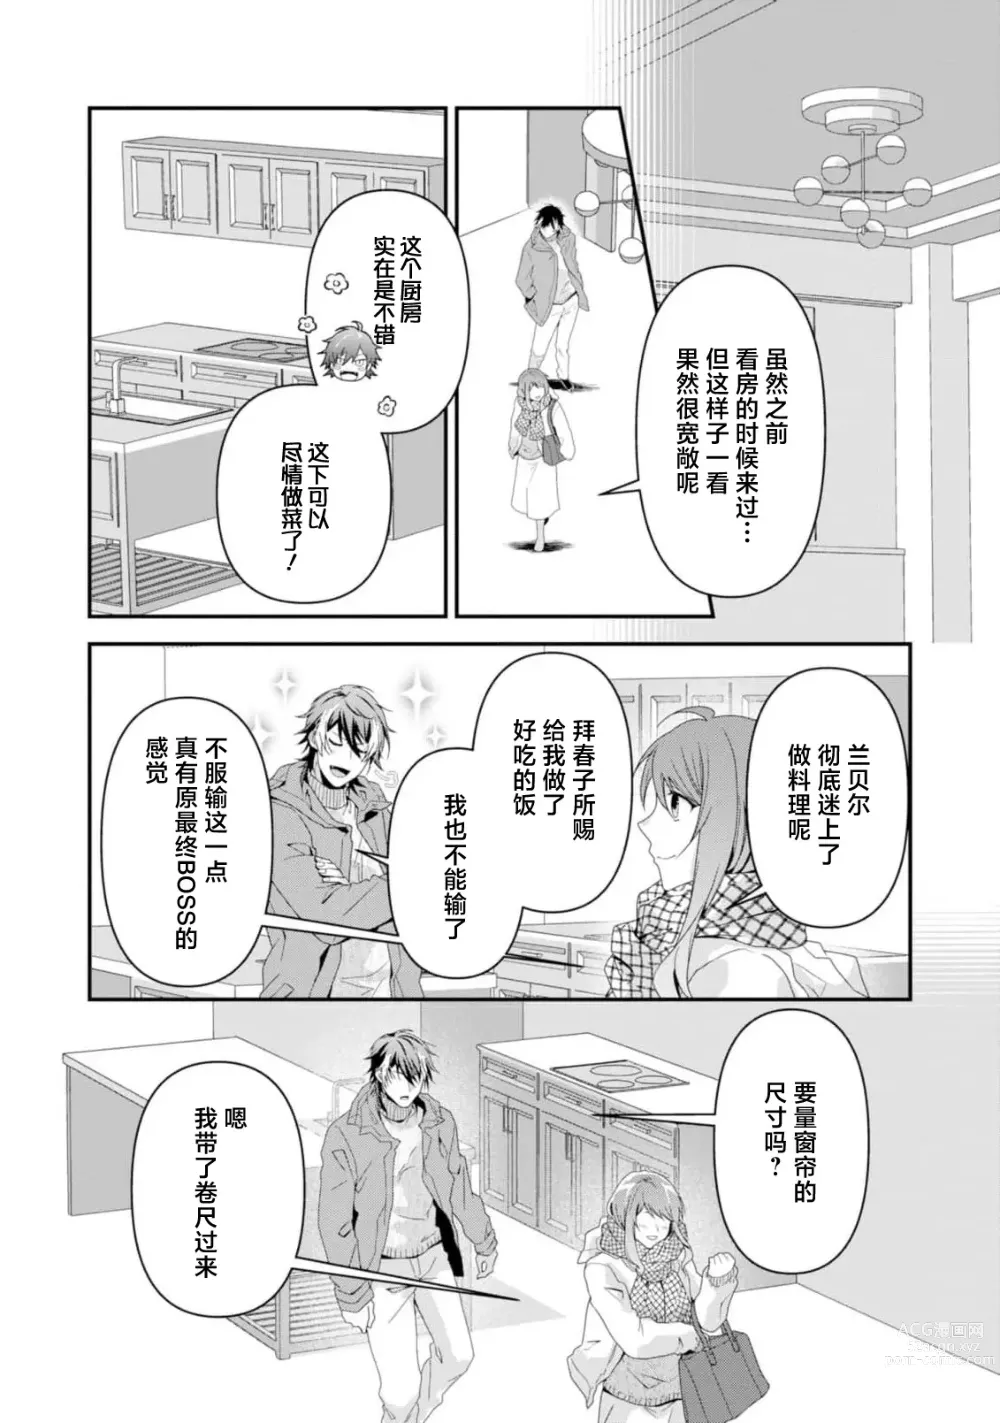 Page 264 of manga 最终BOSS转生而来，因此拿下了他的童贞 1-9 end